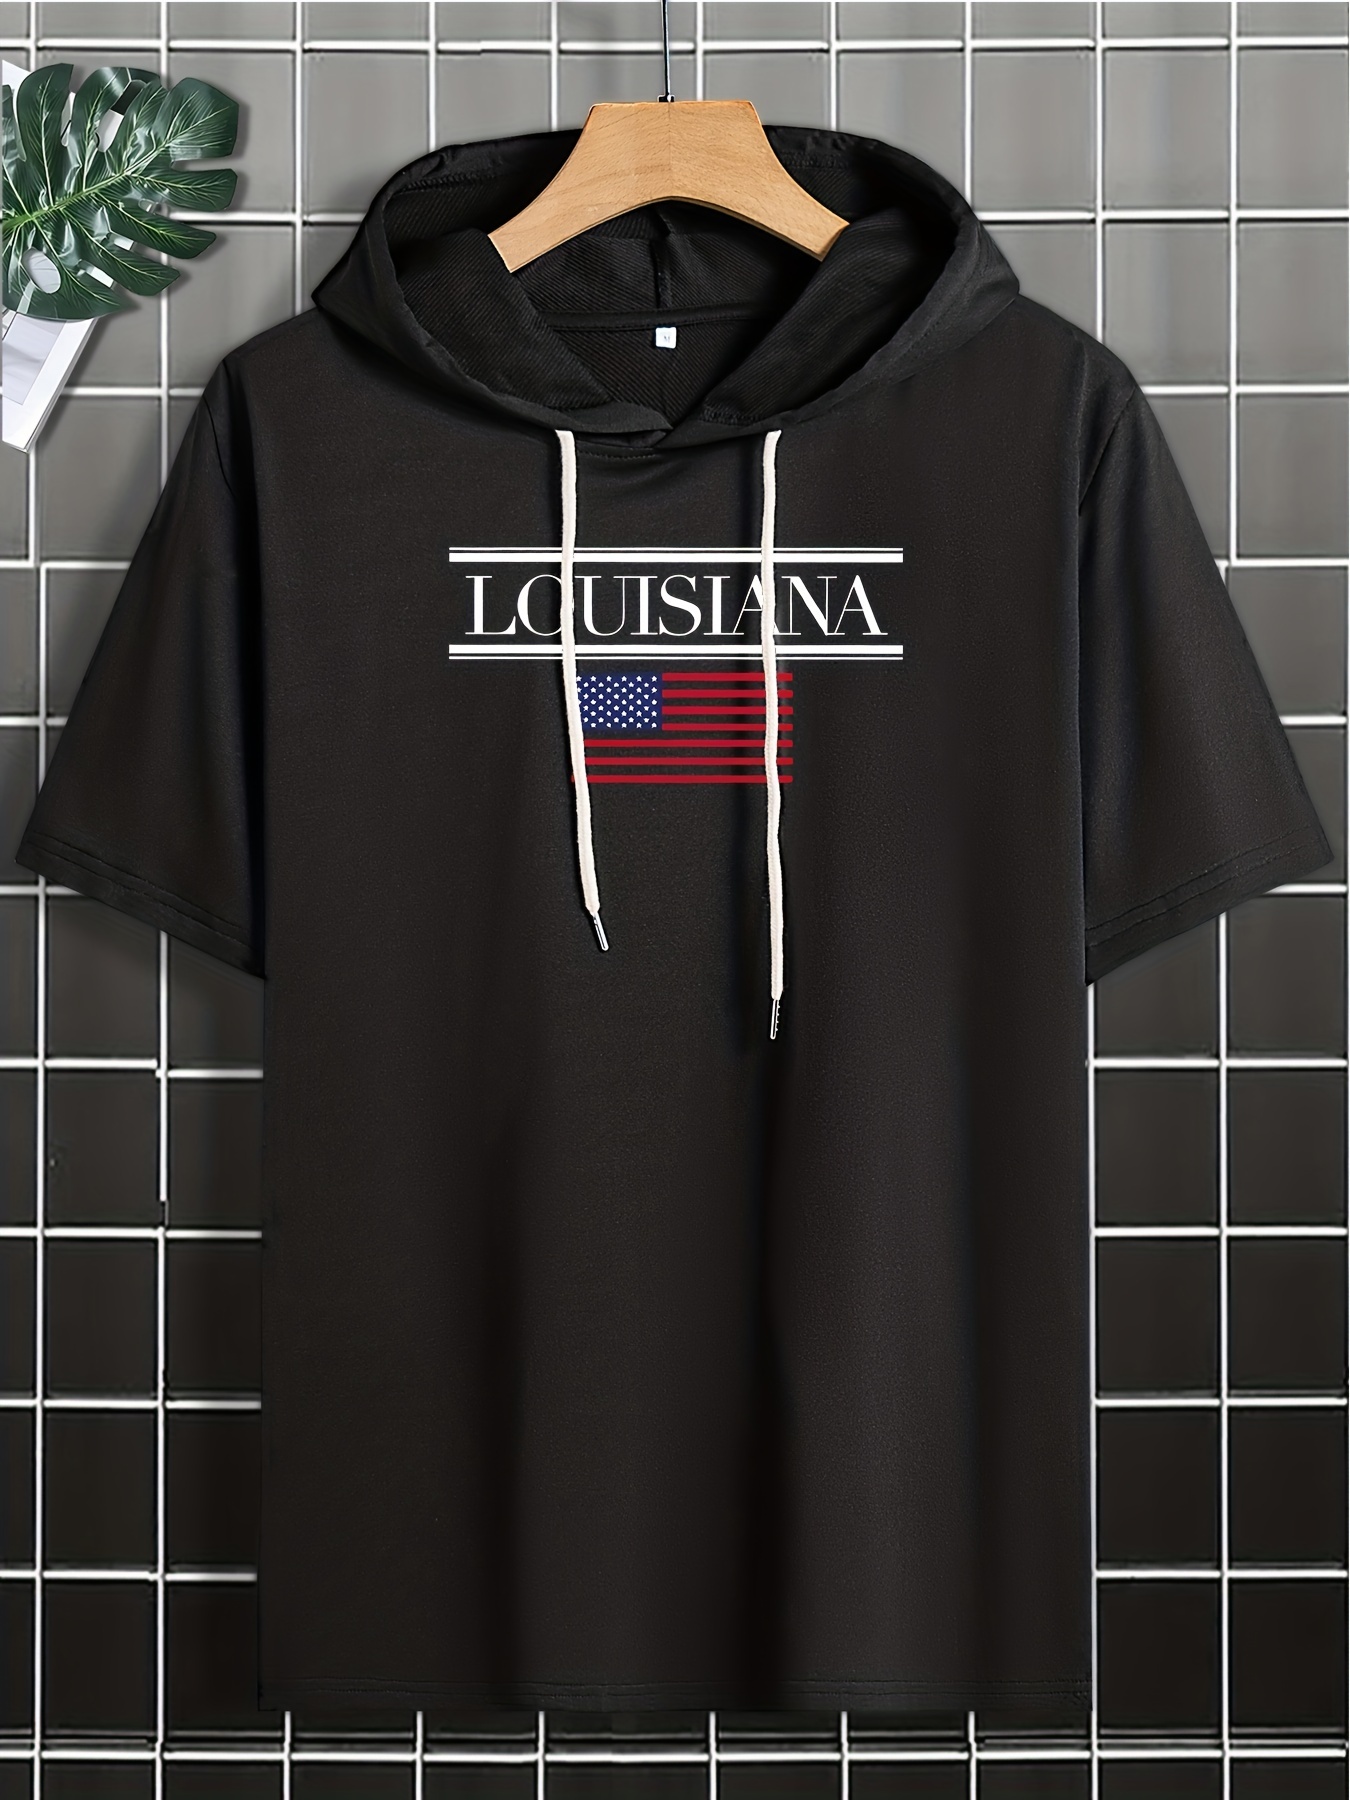 louisiana' Print, Men's Short Sleeve Hoodie Hooded Tshirt, Casual